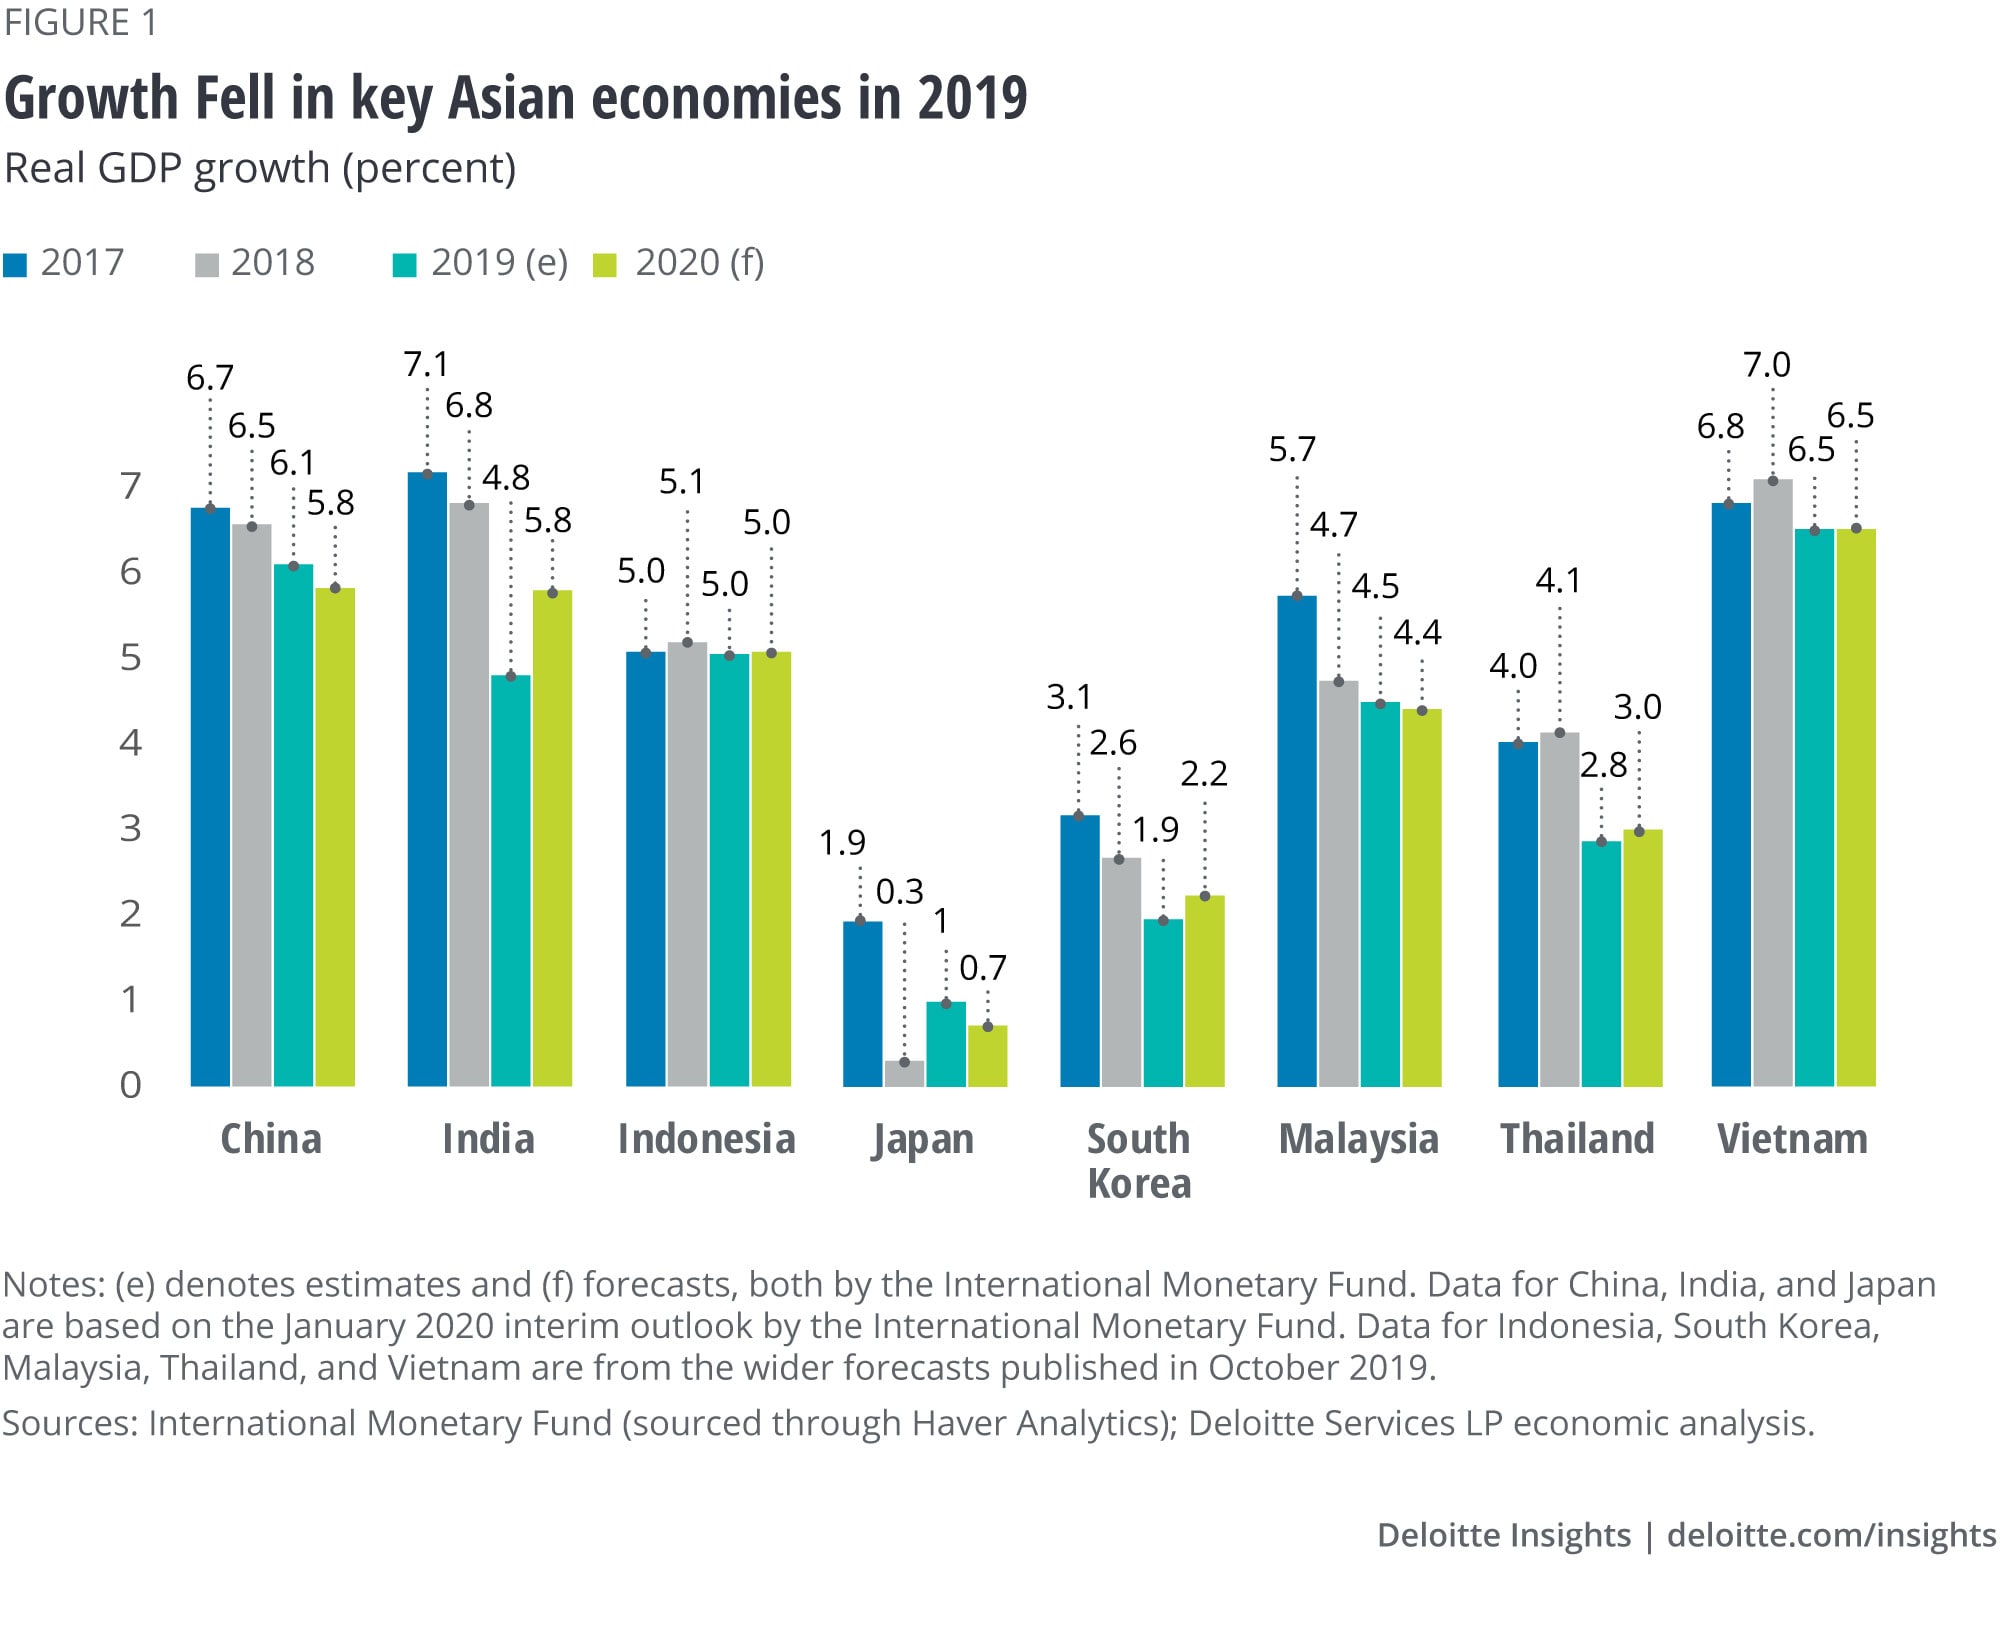 Economic activity has slowed in key economies in Asia